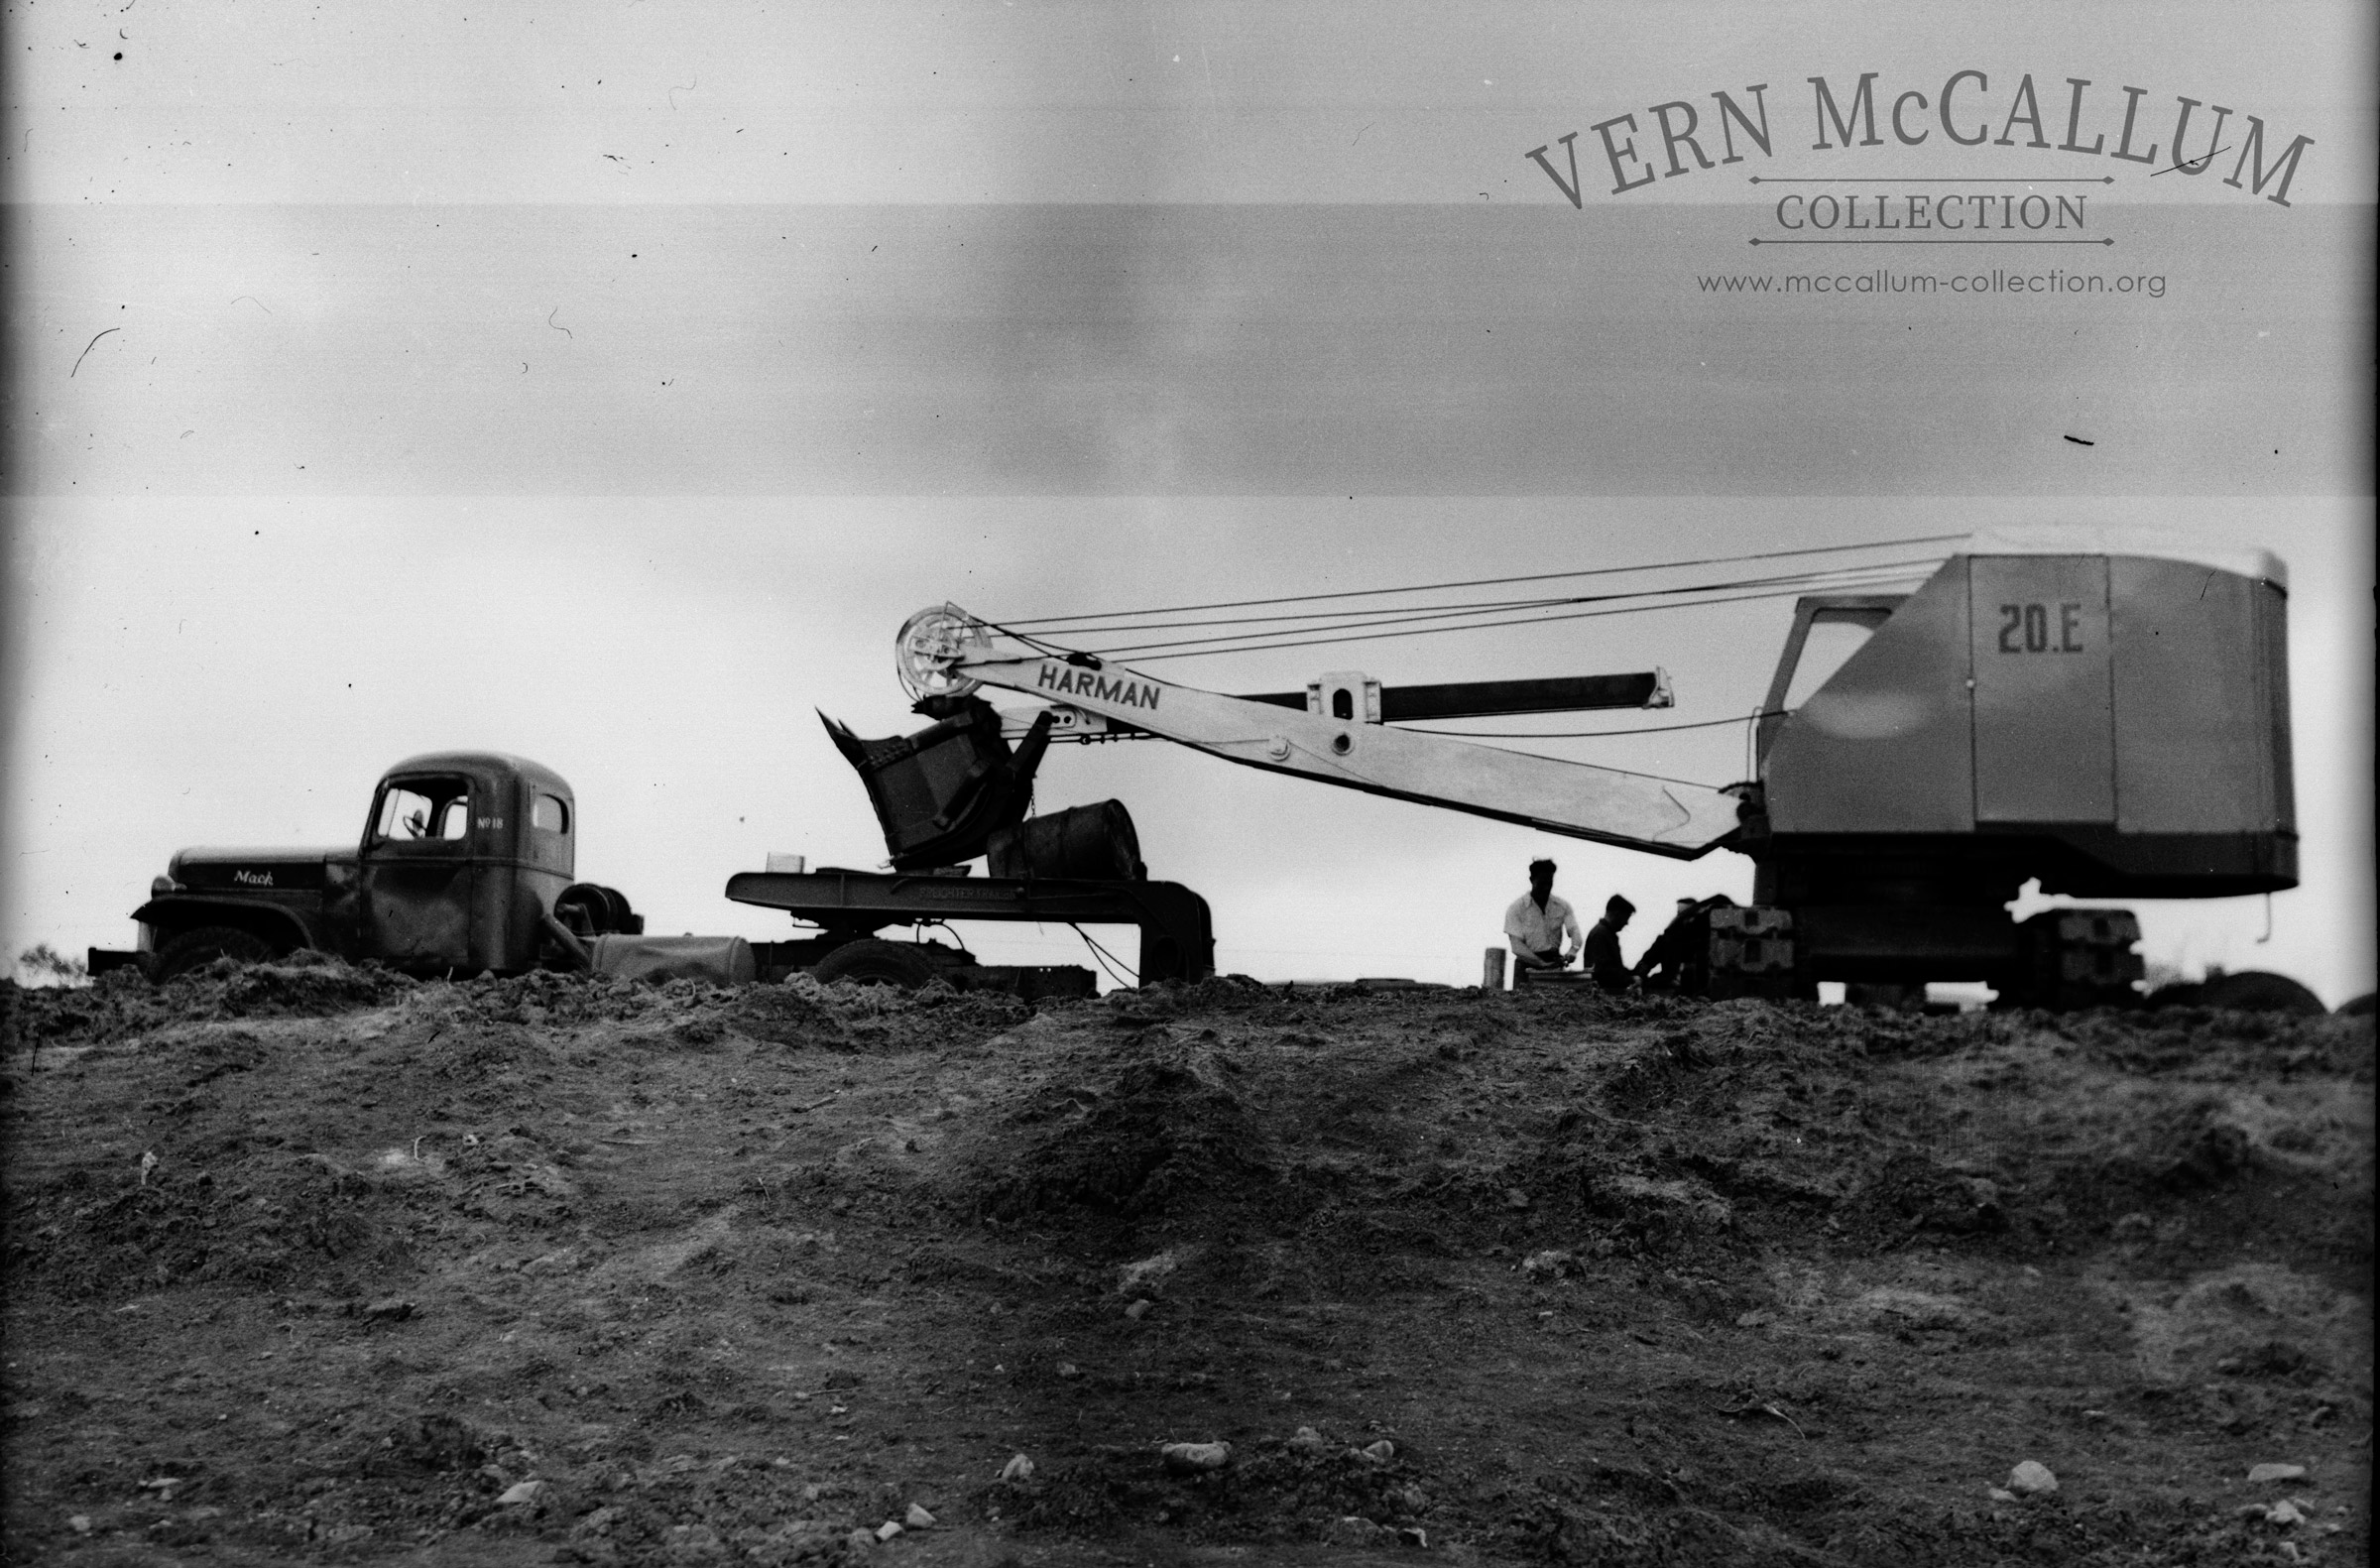 The Harman shovel arriving at Blacknose quarry on a Mack truck.